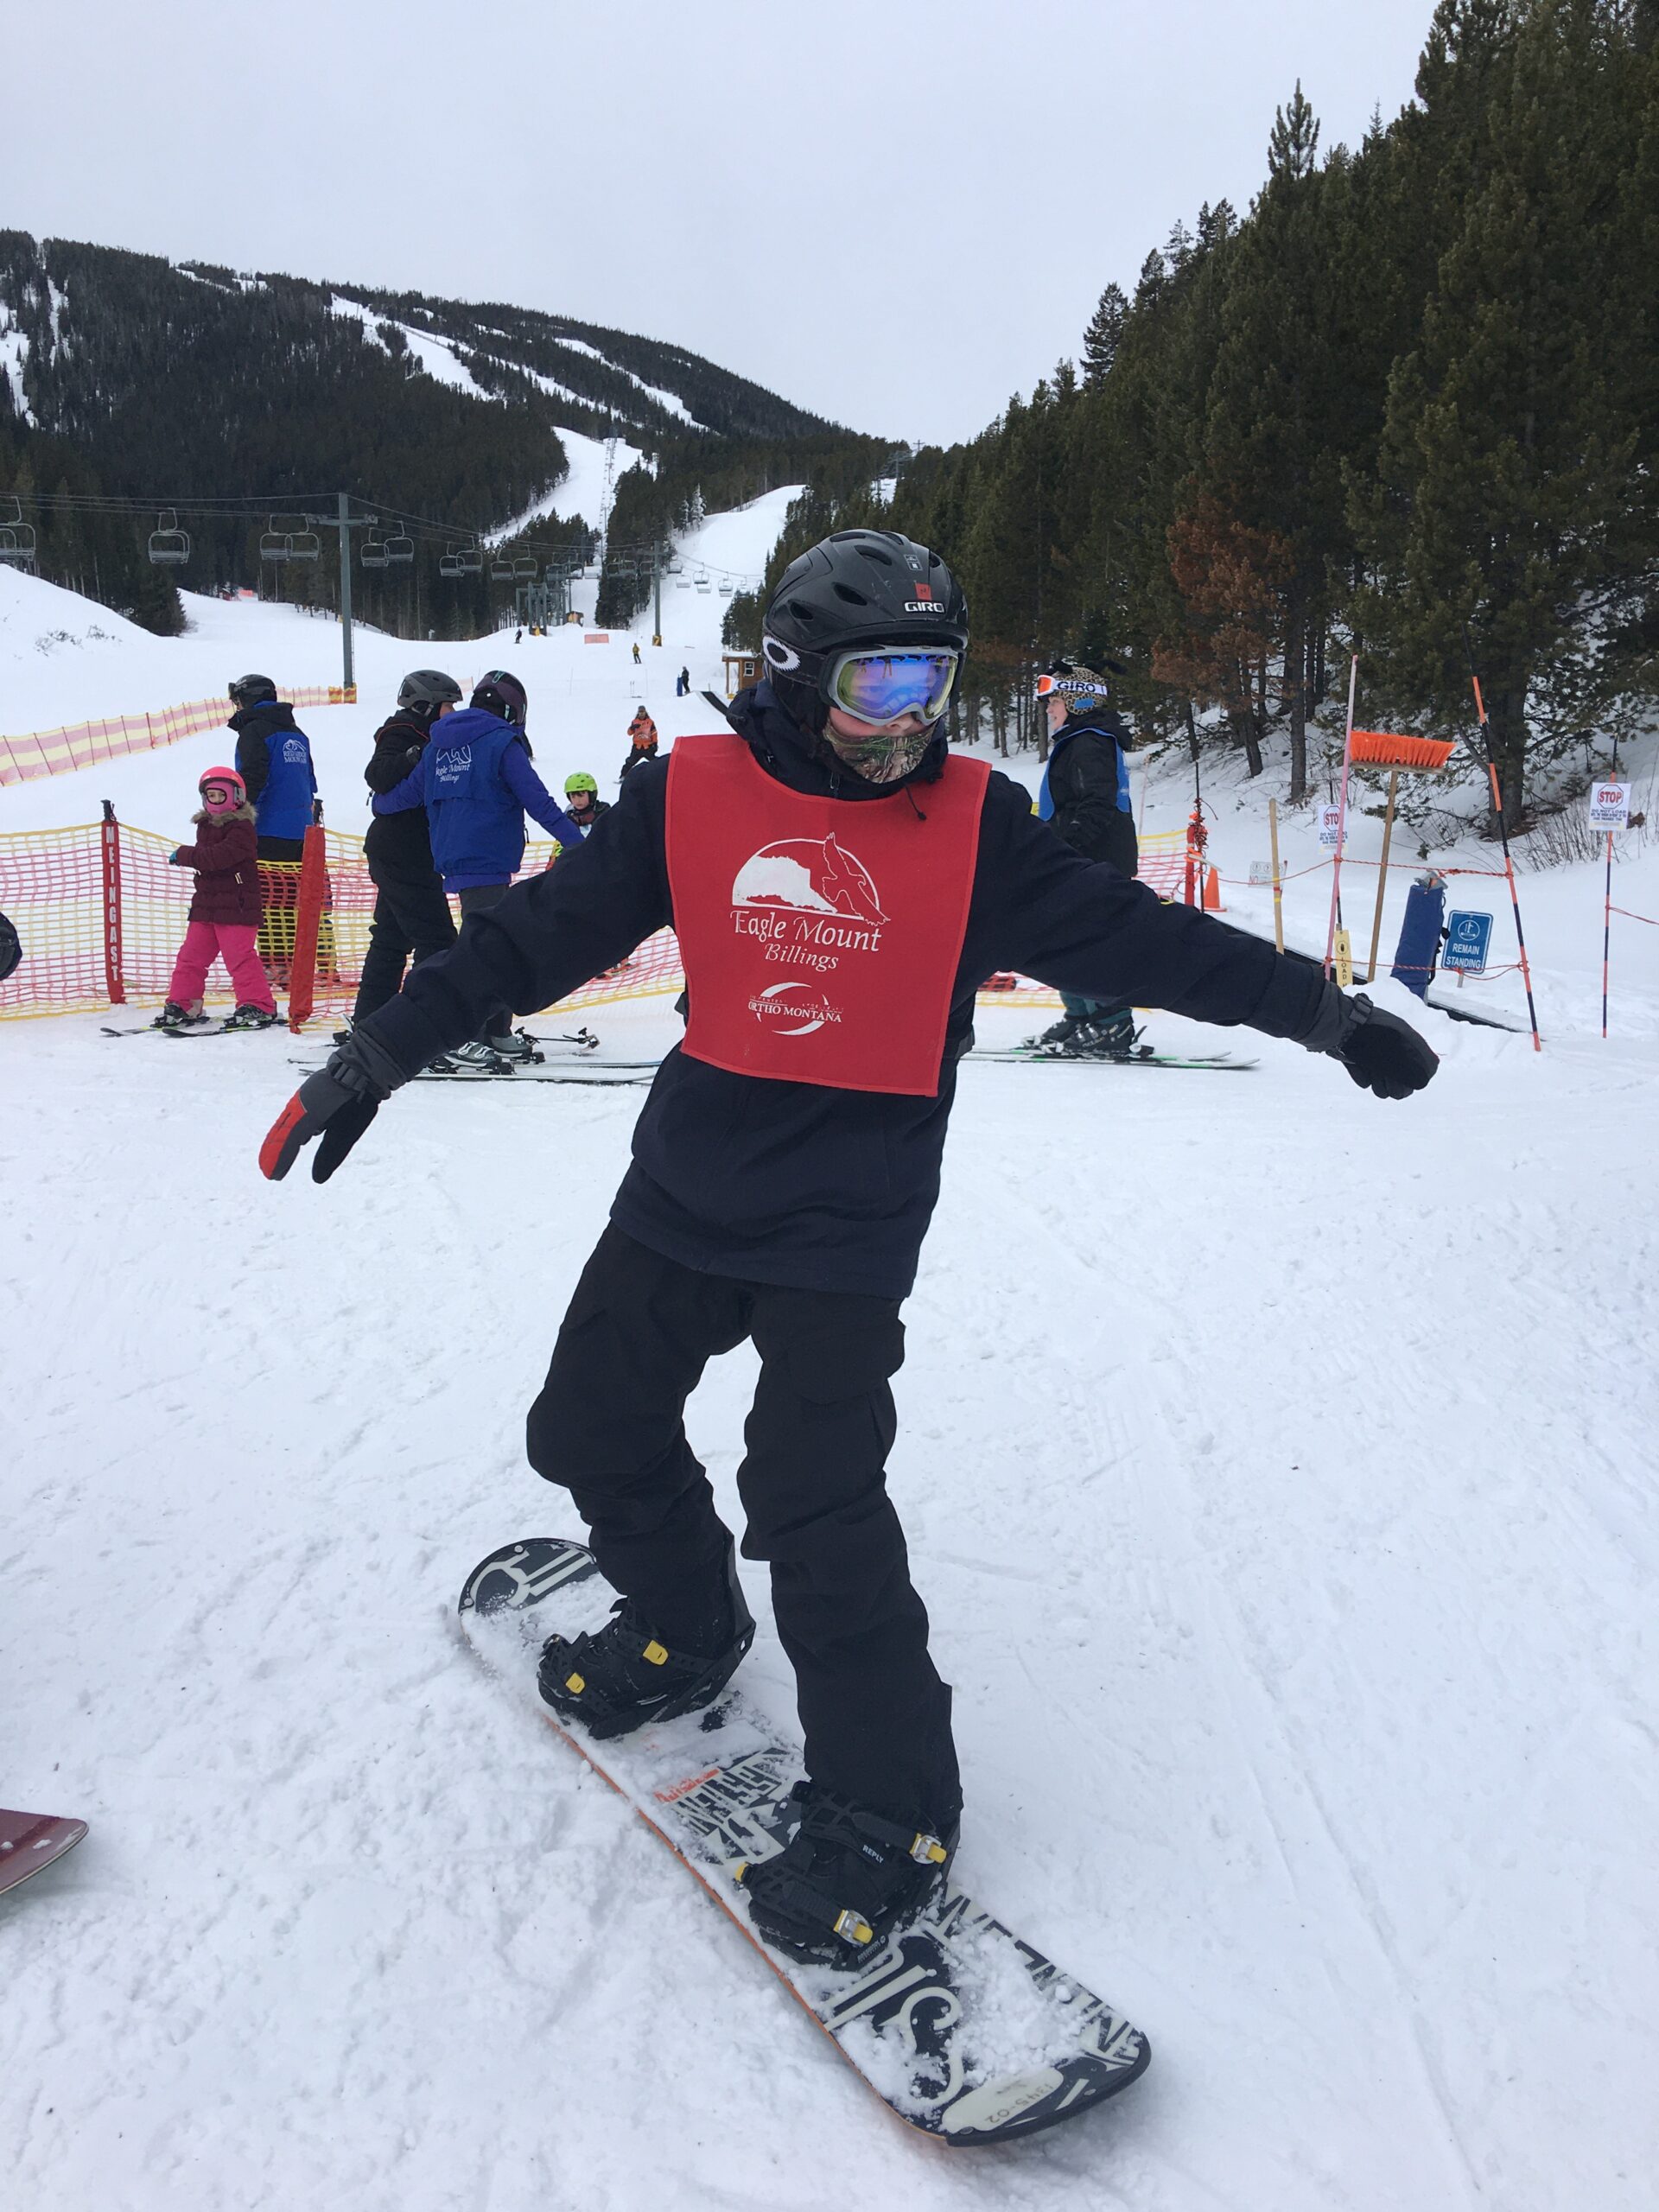 Eagle Mount Billings adaptive snowboard and ski